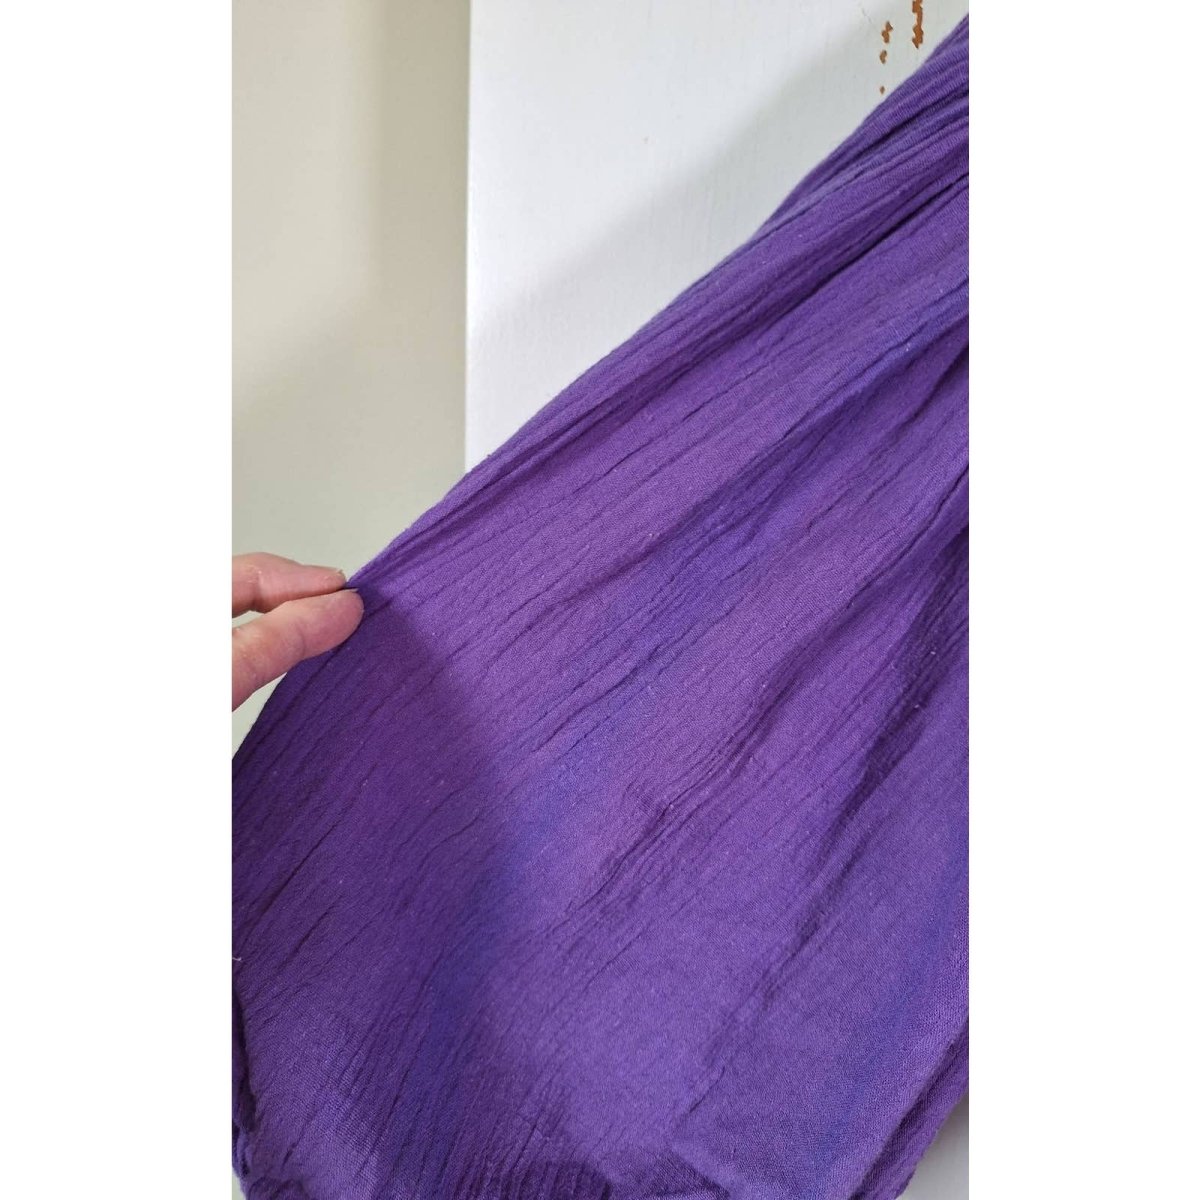 Vintage Purple Cotton Gauze Boho Skirt Cropped Blouse Set Women's Size L/1X 16/18 - themallvintage The Mall Vintage 1970s Boho Matching Set